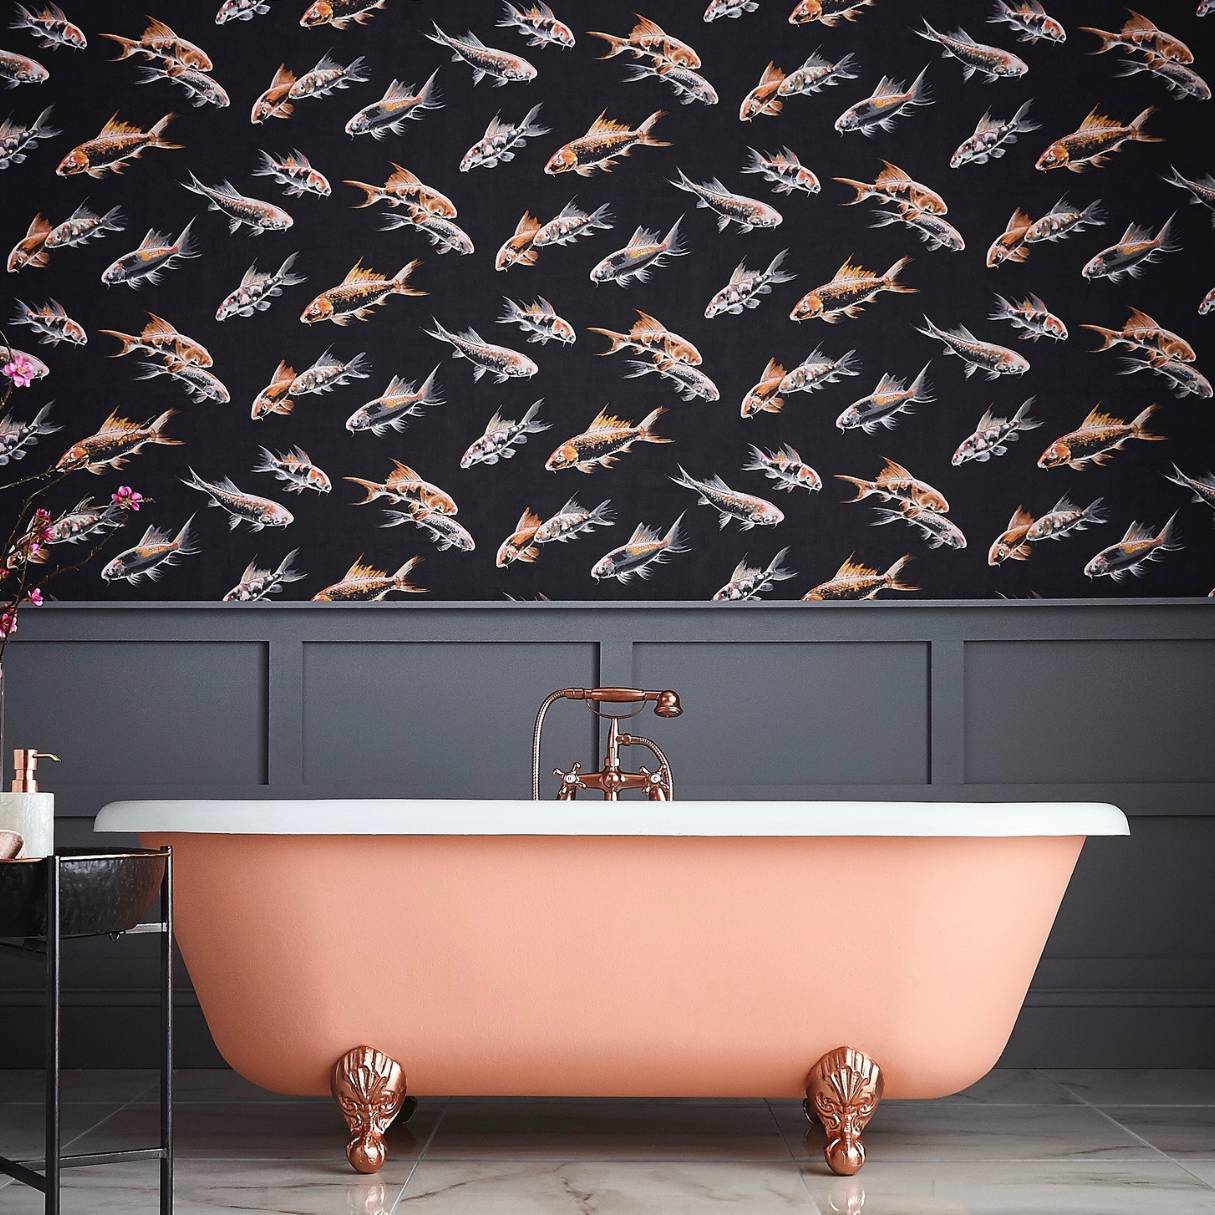 Bathroom Wallpaper Ideas: 11 Best Wallpapers For Bathroom